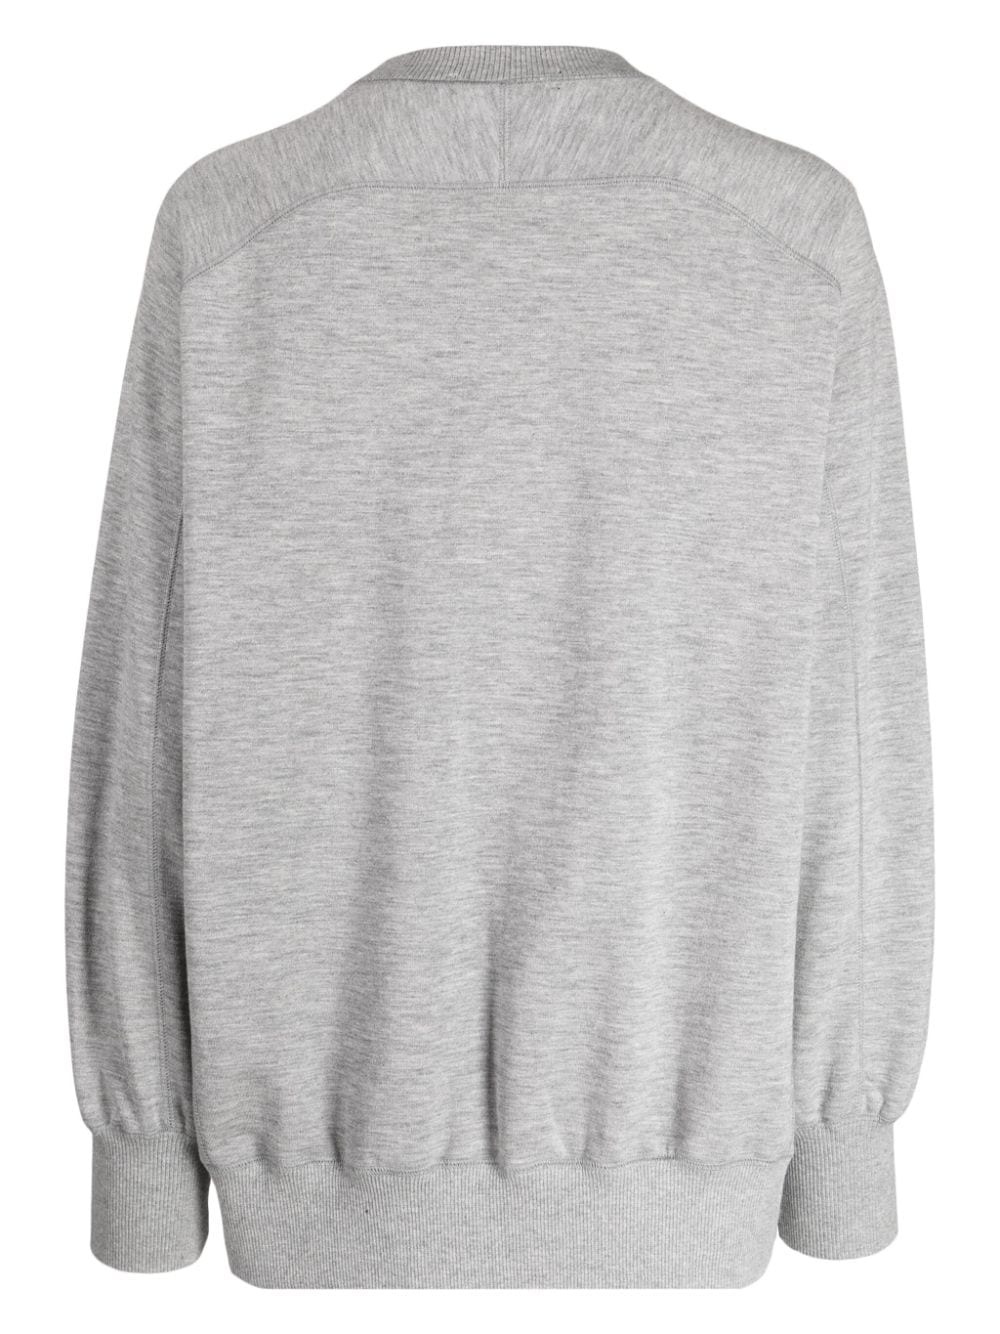 hand-appliquÃ© jersey sweatshirt